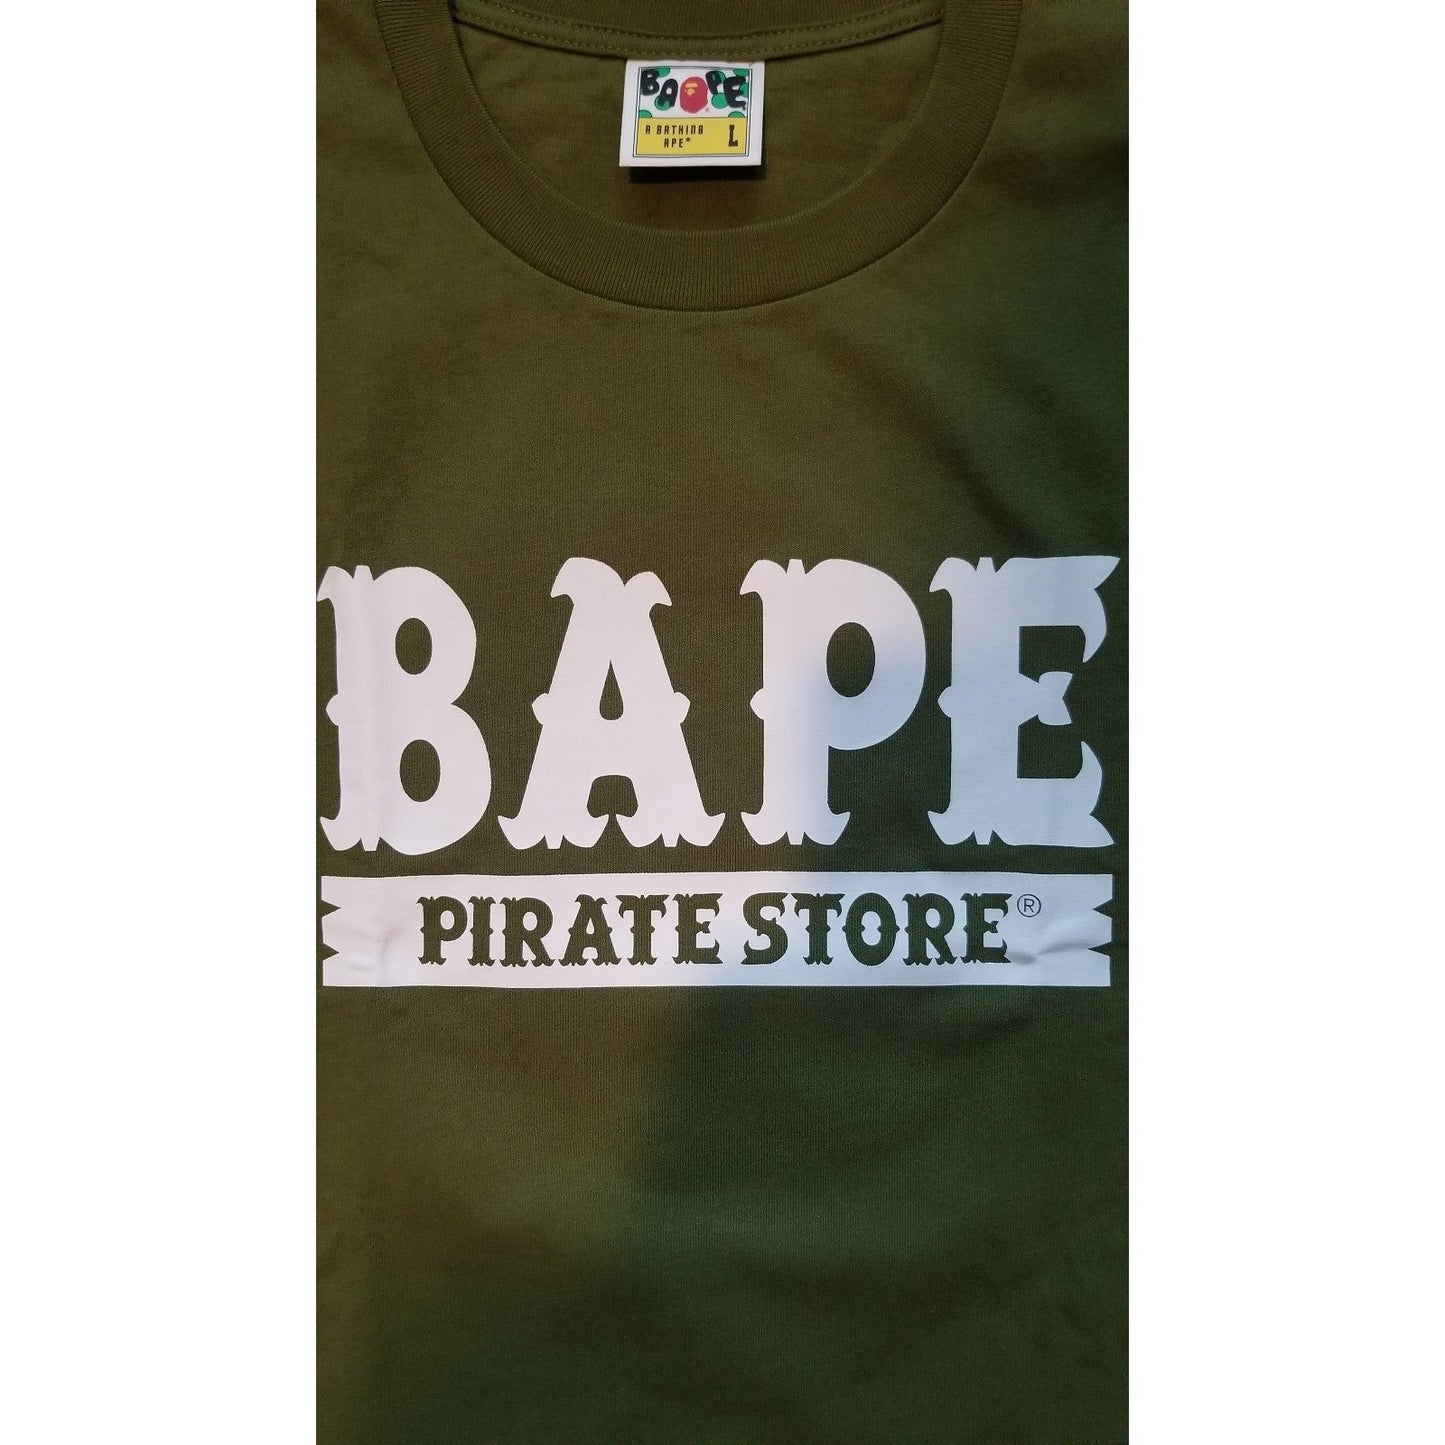 A Bathing Ape Pirate Store Mens Tee, Big Ape Crossbone College Tee (Rare Find)